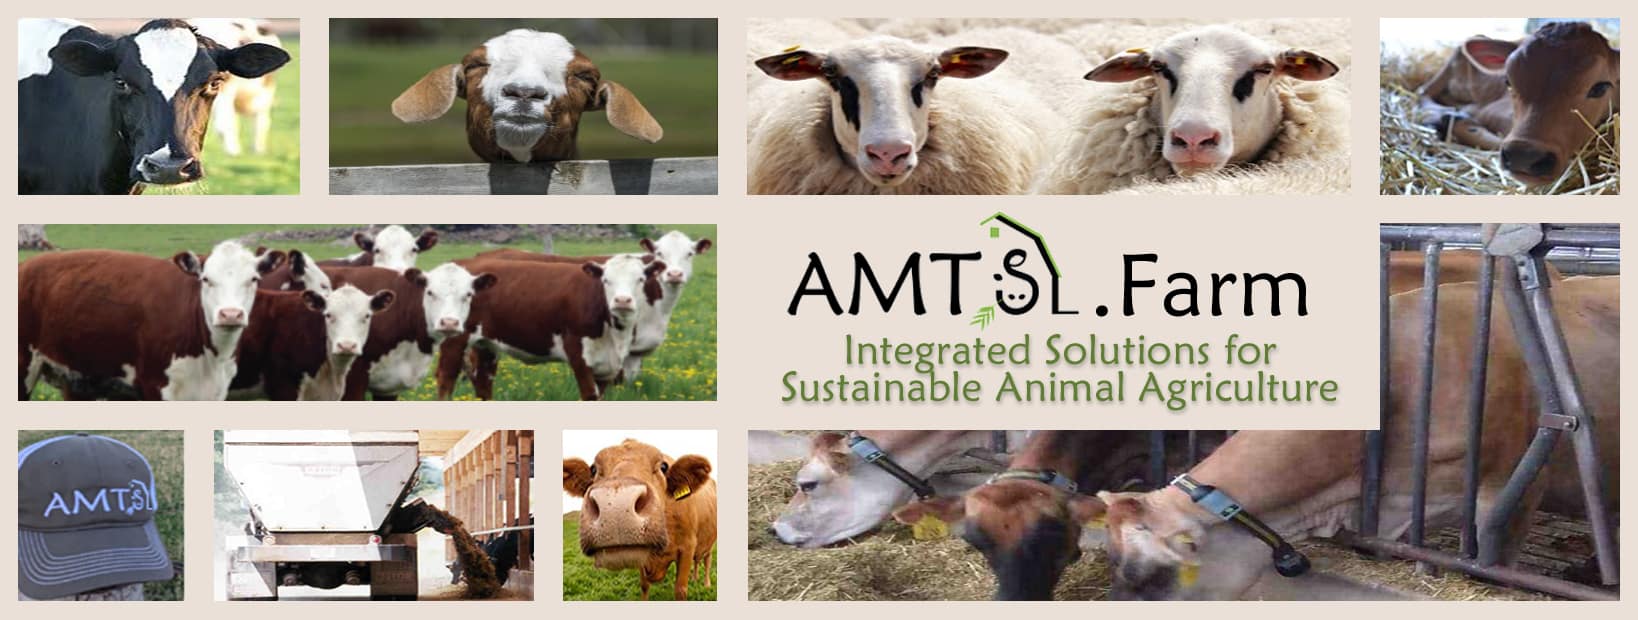 AMTS Farm Program update